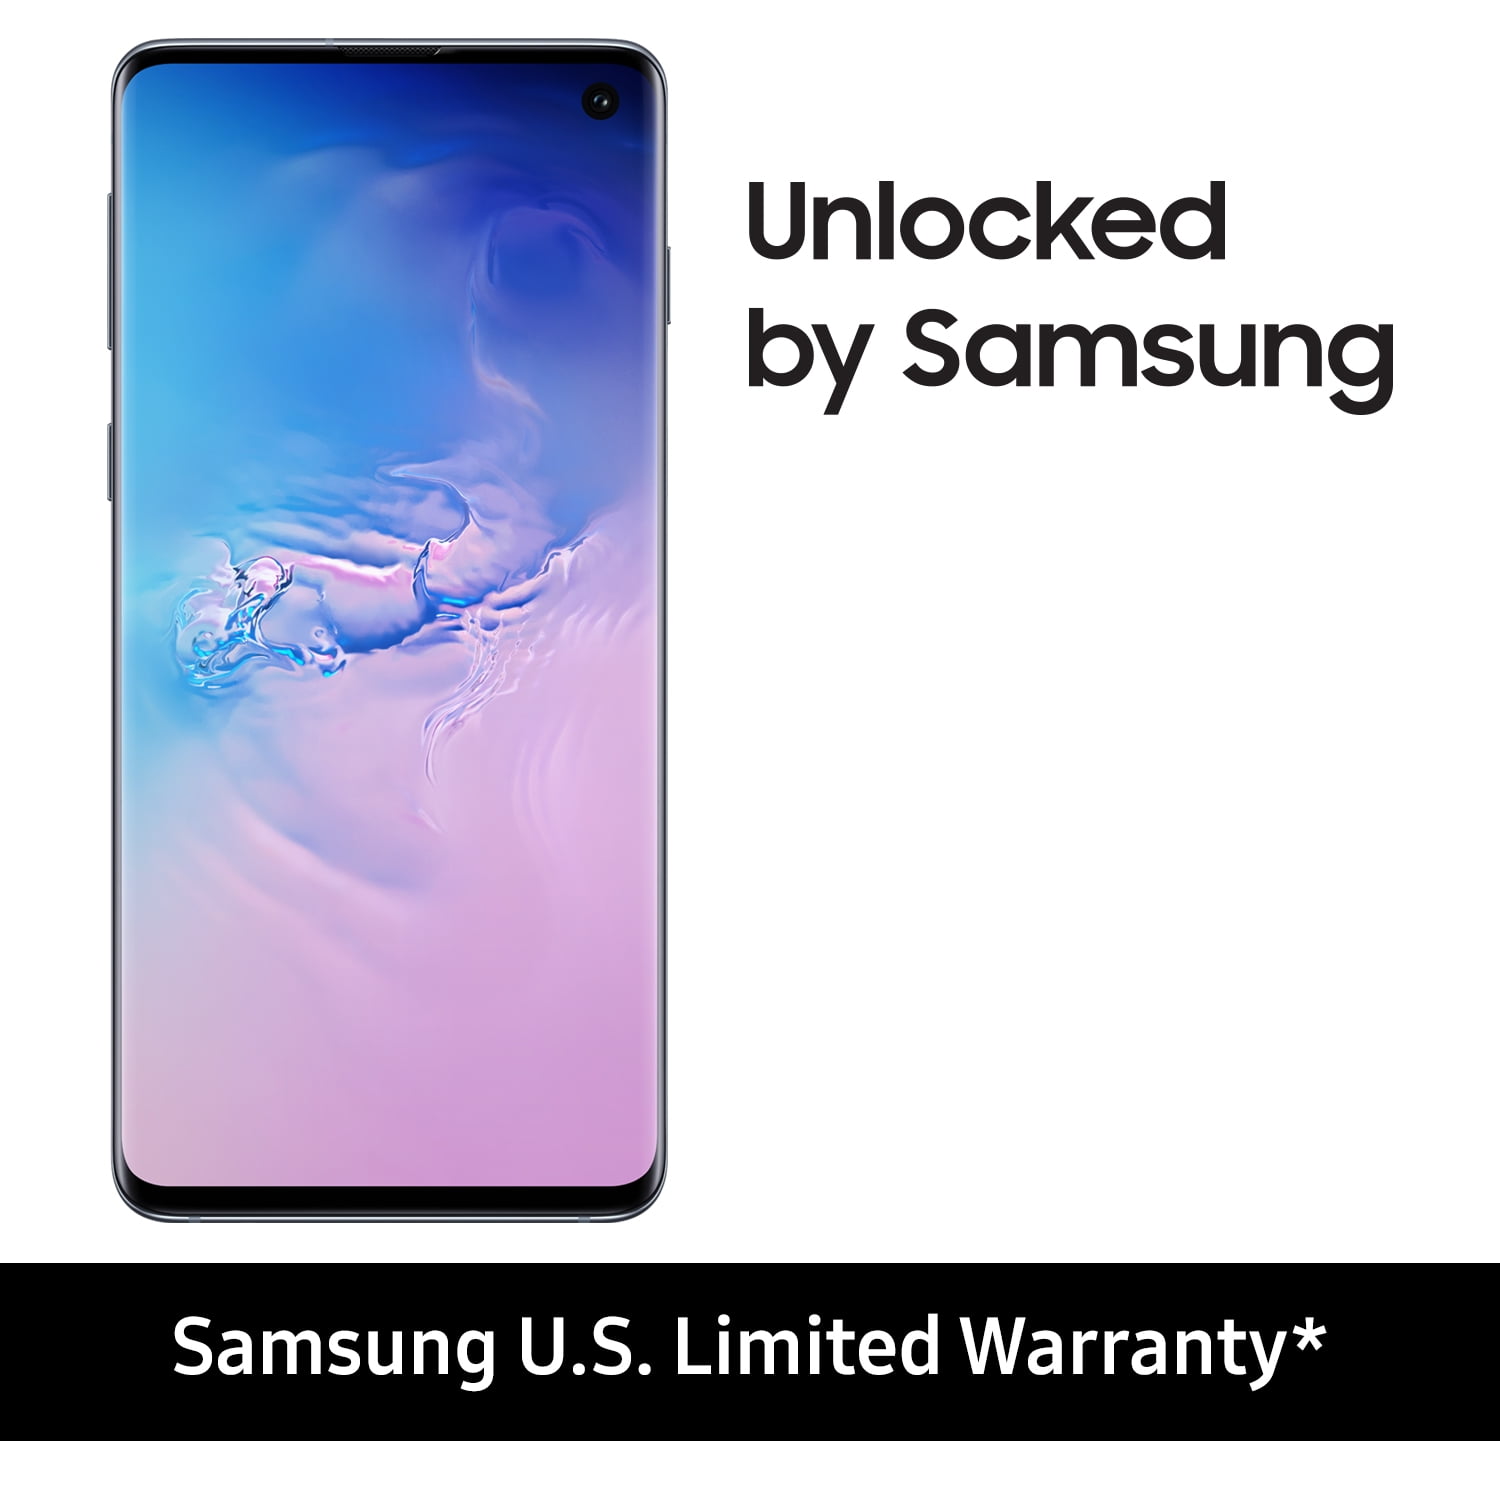 SAMSUNG Unlocked Galaxy S10, 128GB Blue - Smartphone - Walmart.com